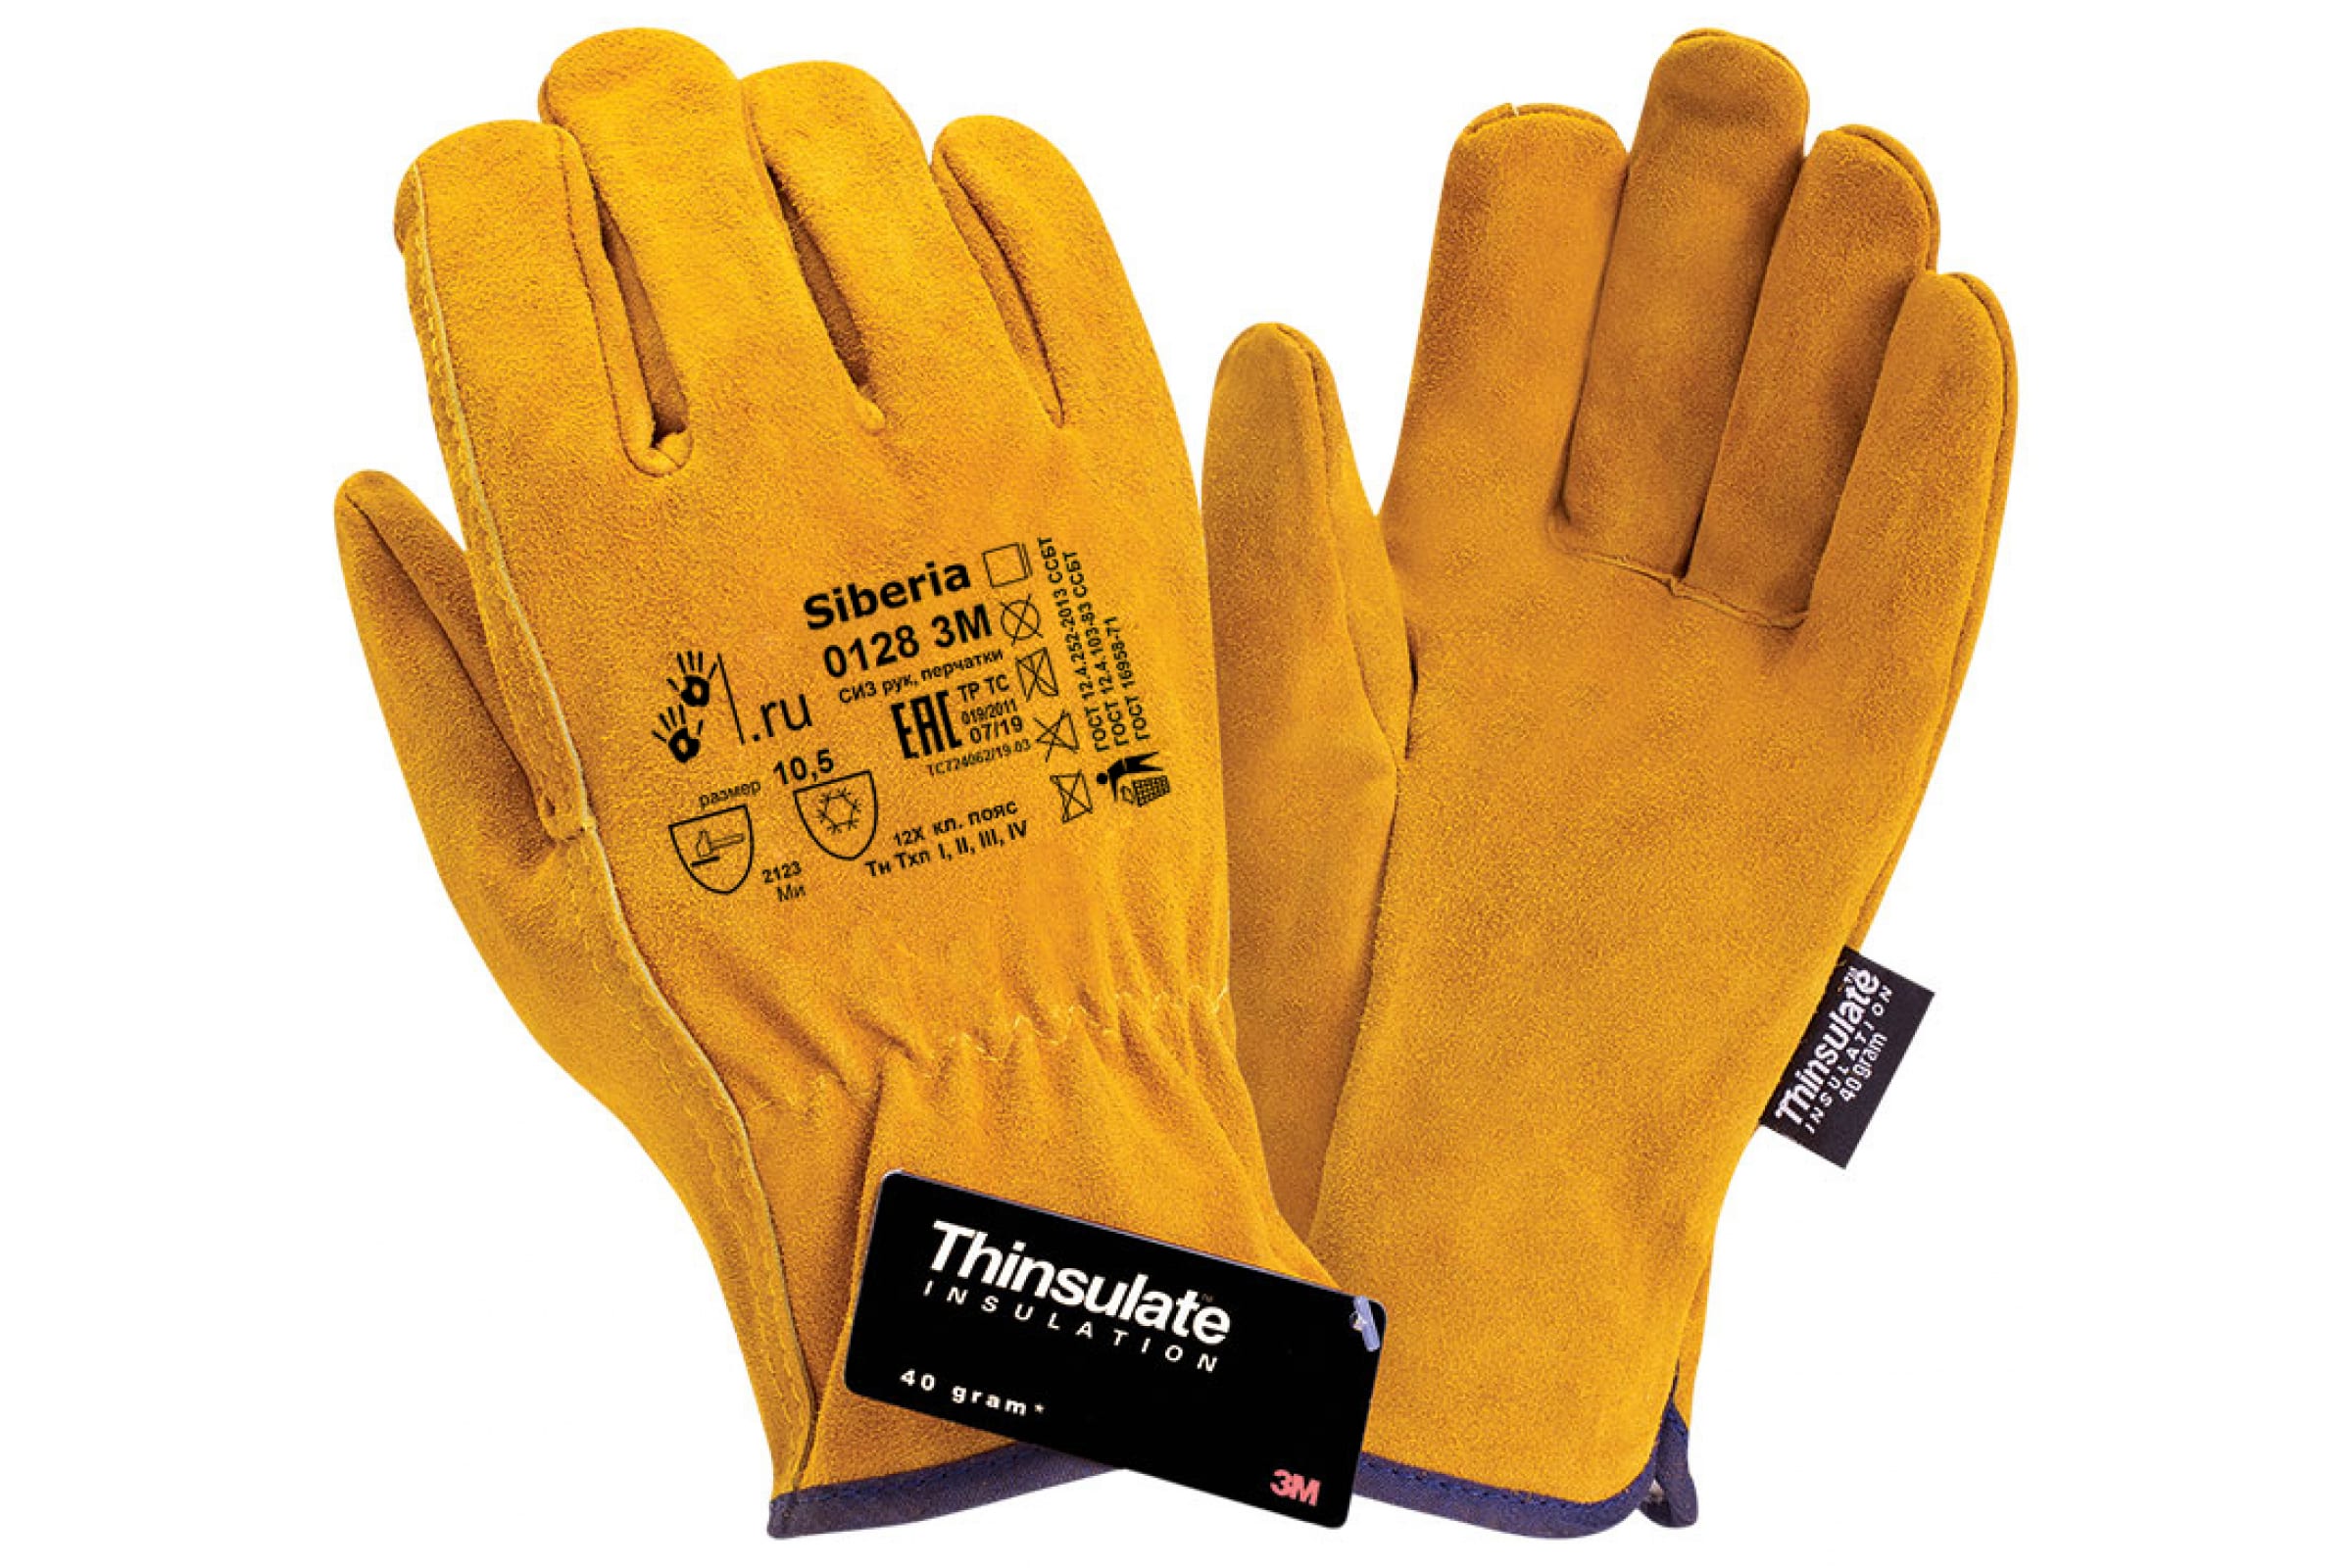 2Hands Перчатки утепленные, спилок КРС/Thinsulate 3М 0128 3M Siberia утепленные перчатки 2hands 0148